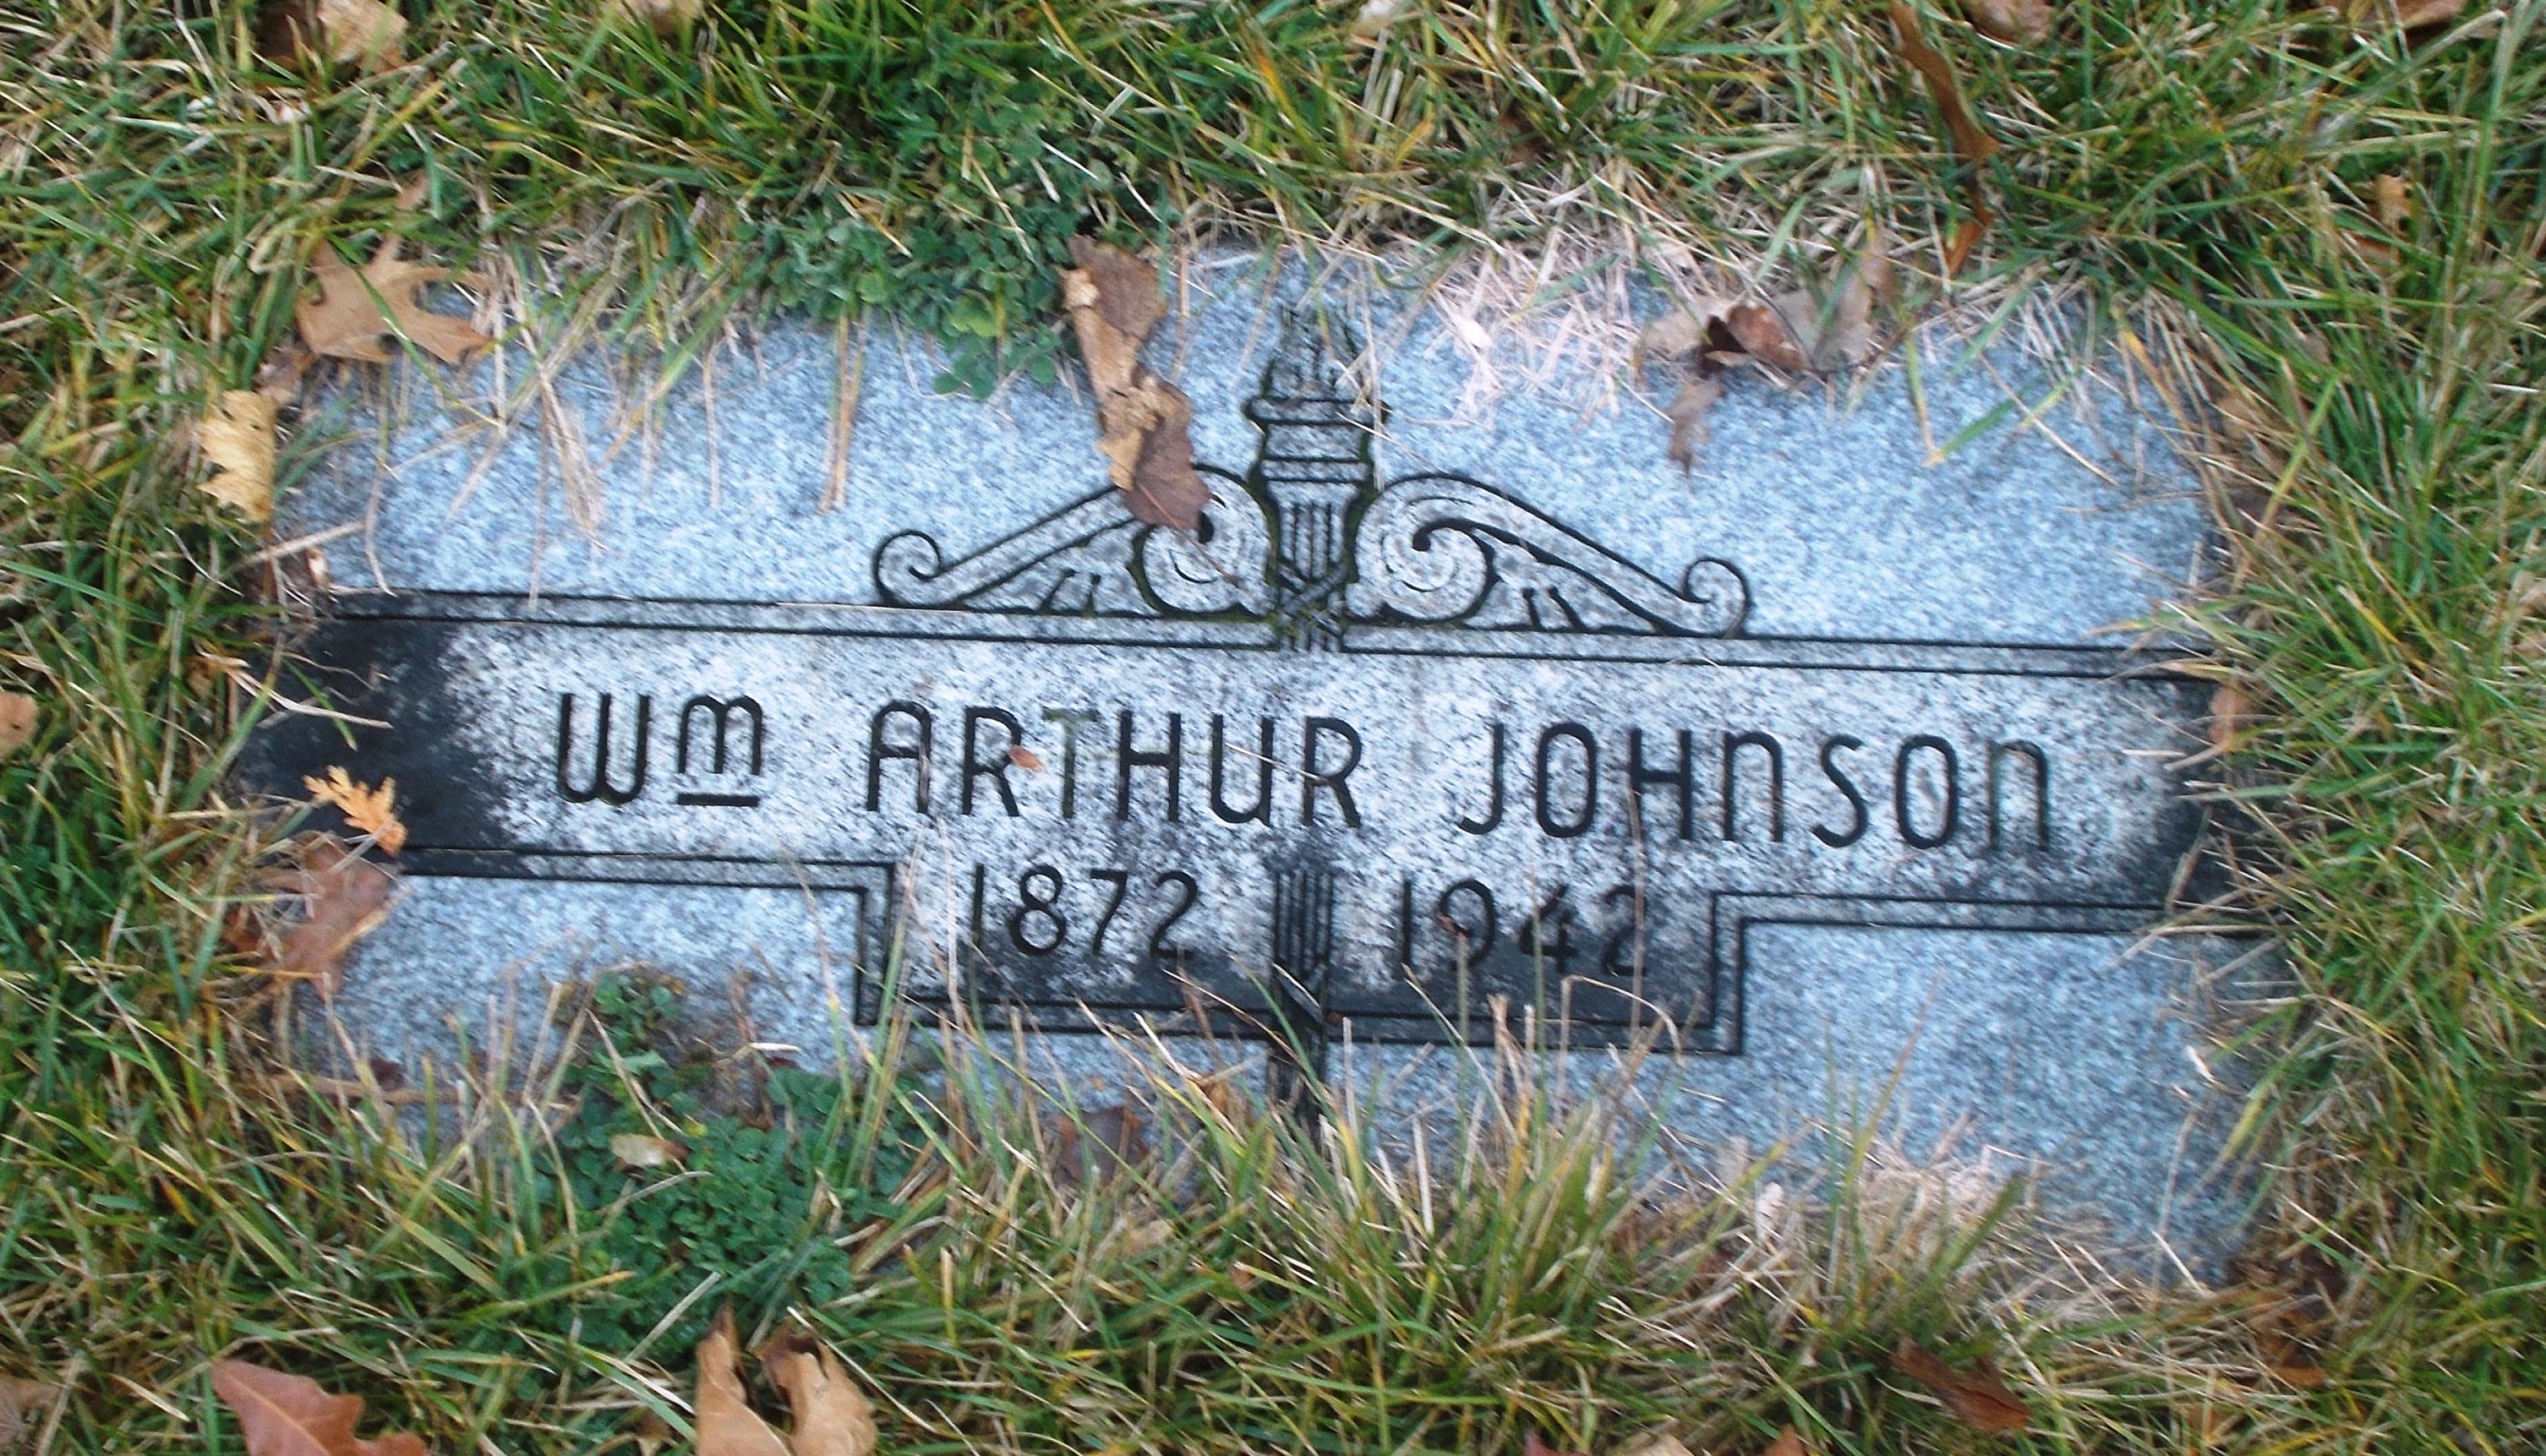 Wm Arthur Johnson